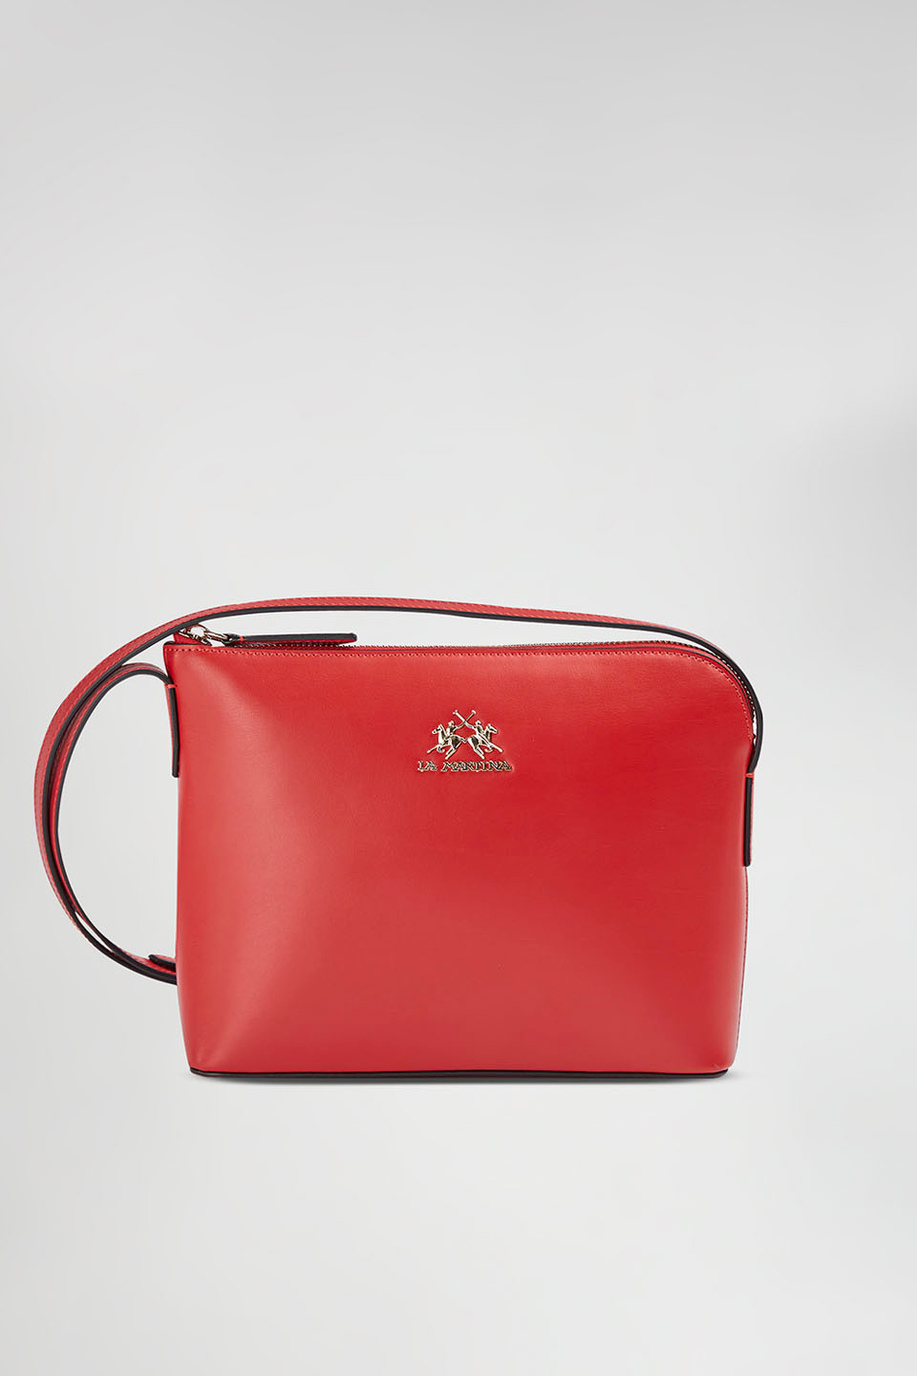 Leather bag - Accessories Woman | La Martina - Official Online Shop